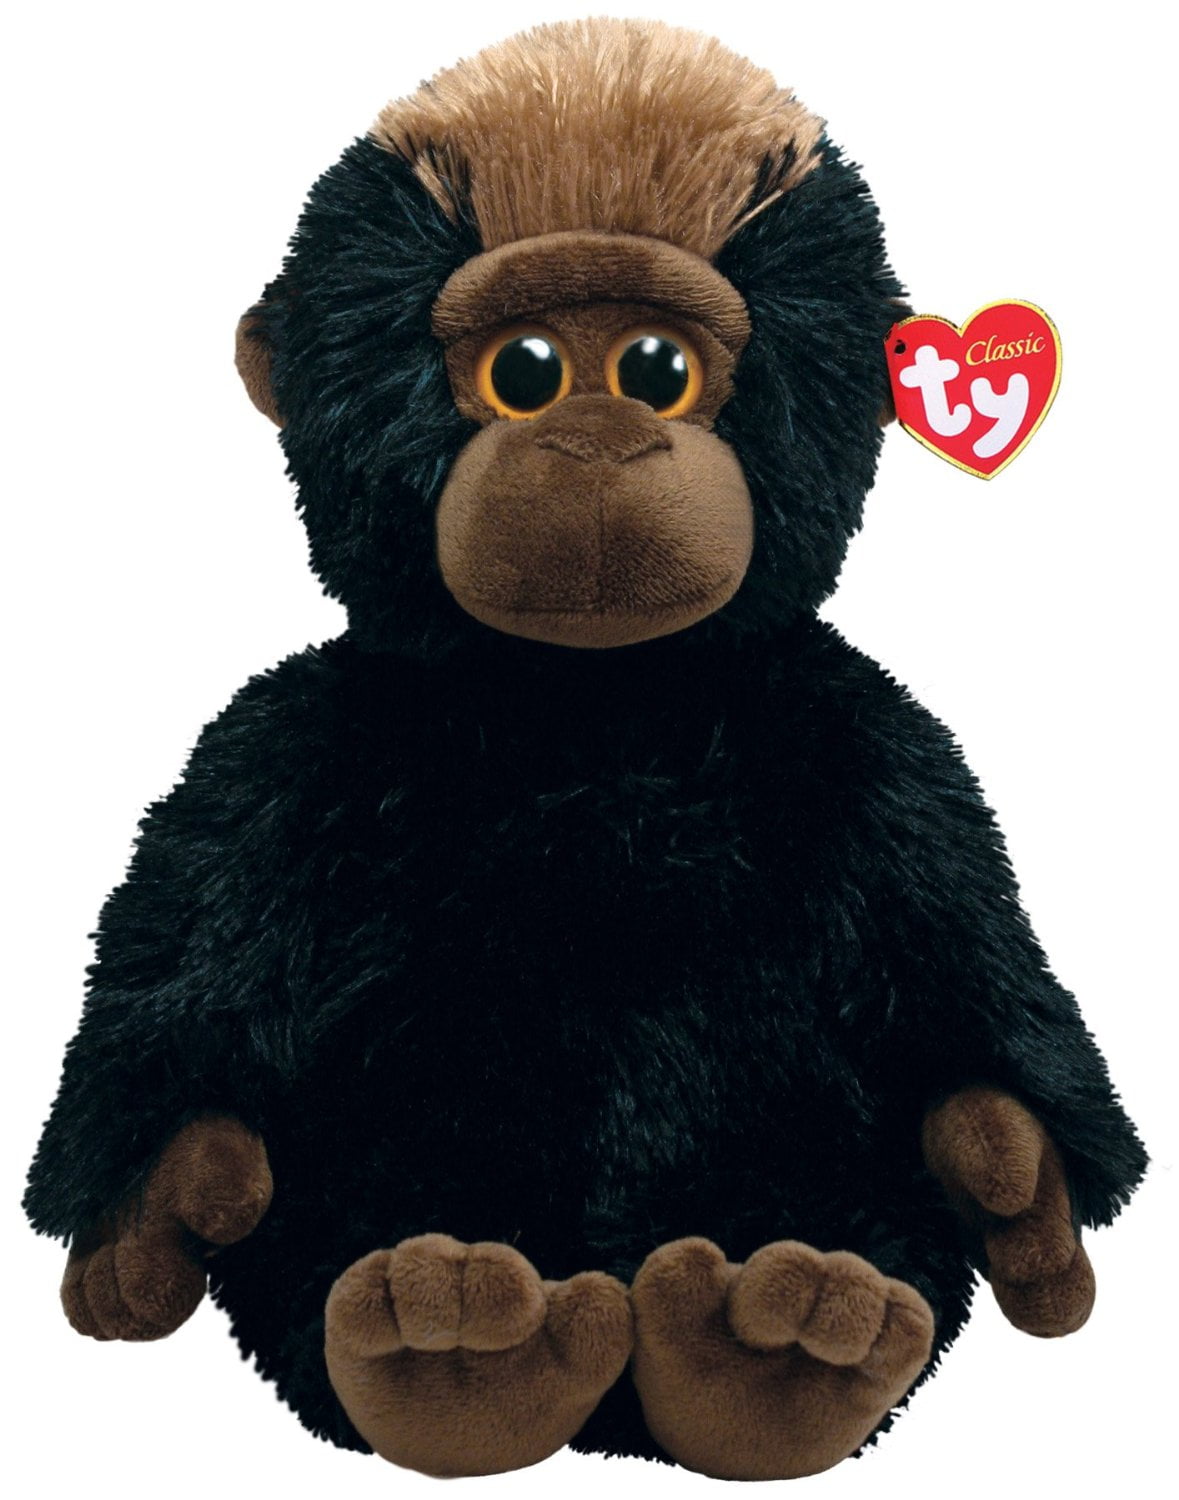 stuffed gorilla walmart